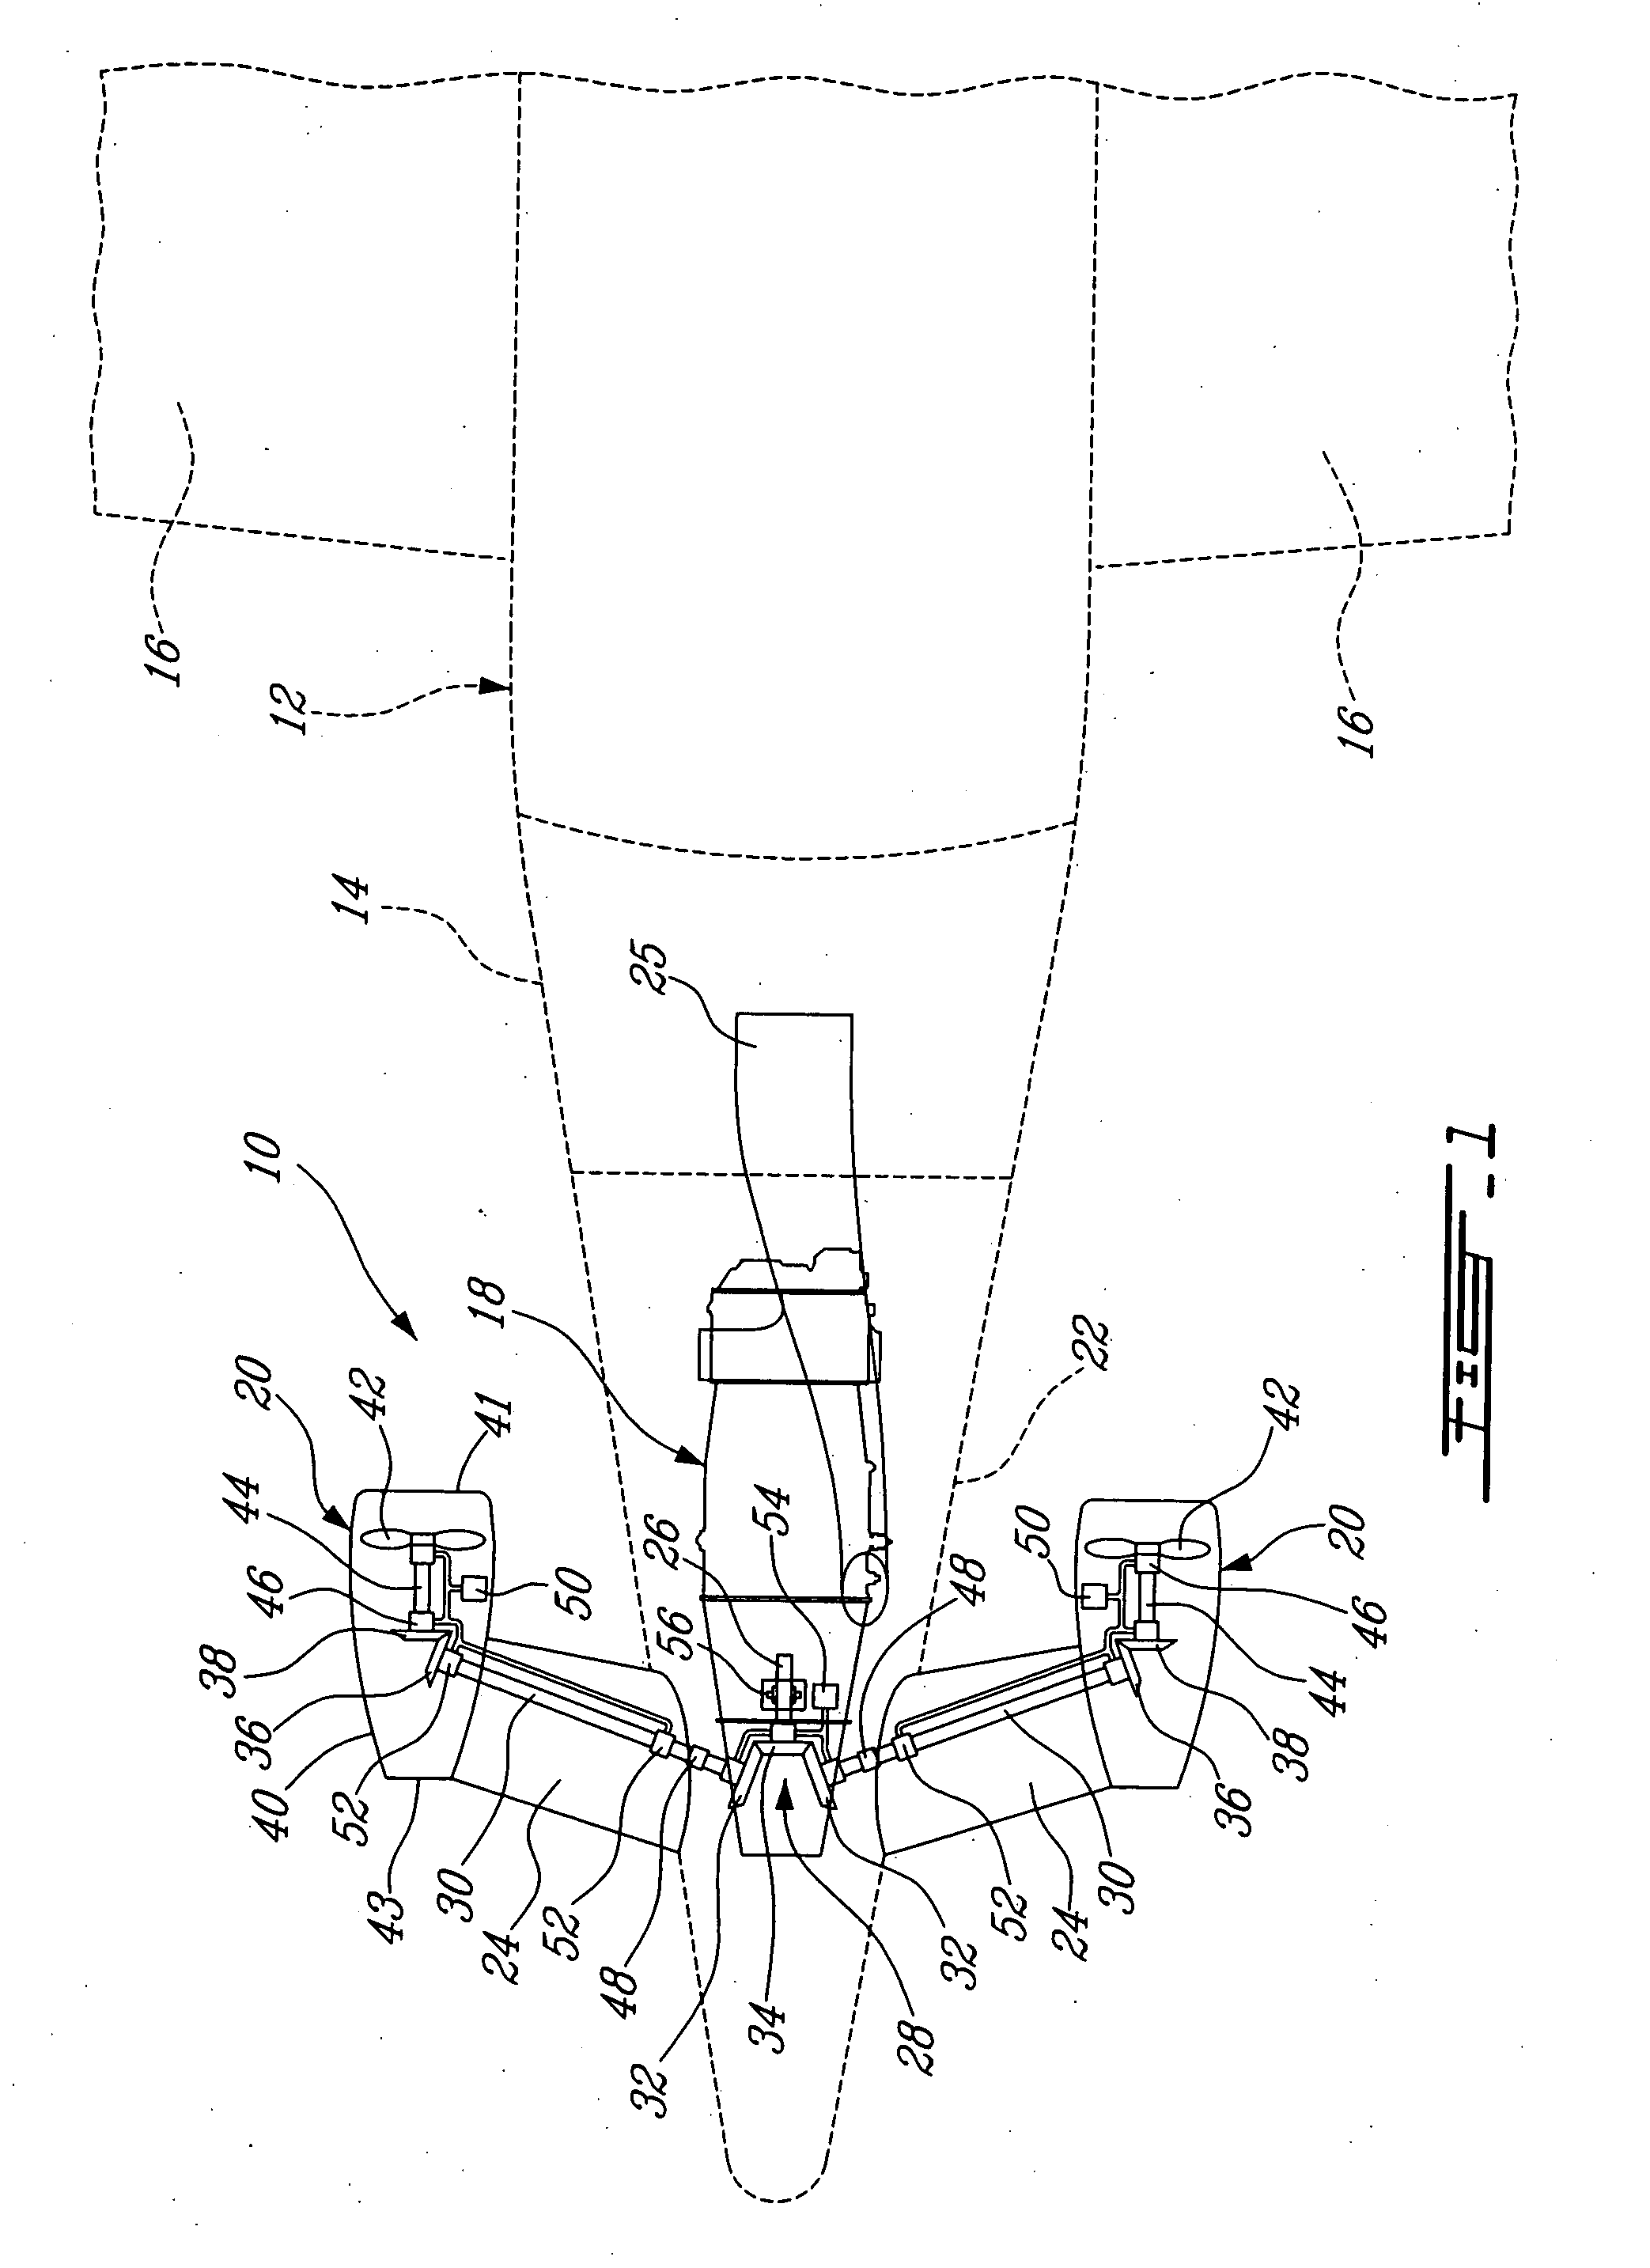 Aircraft propulsion system